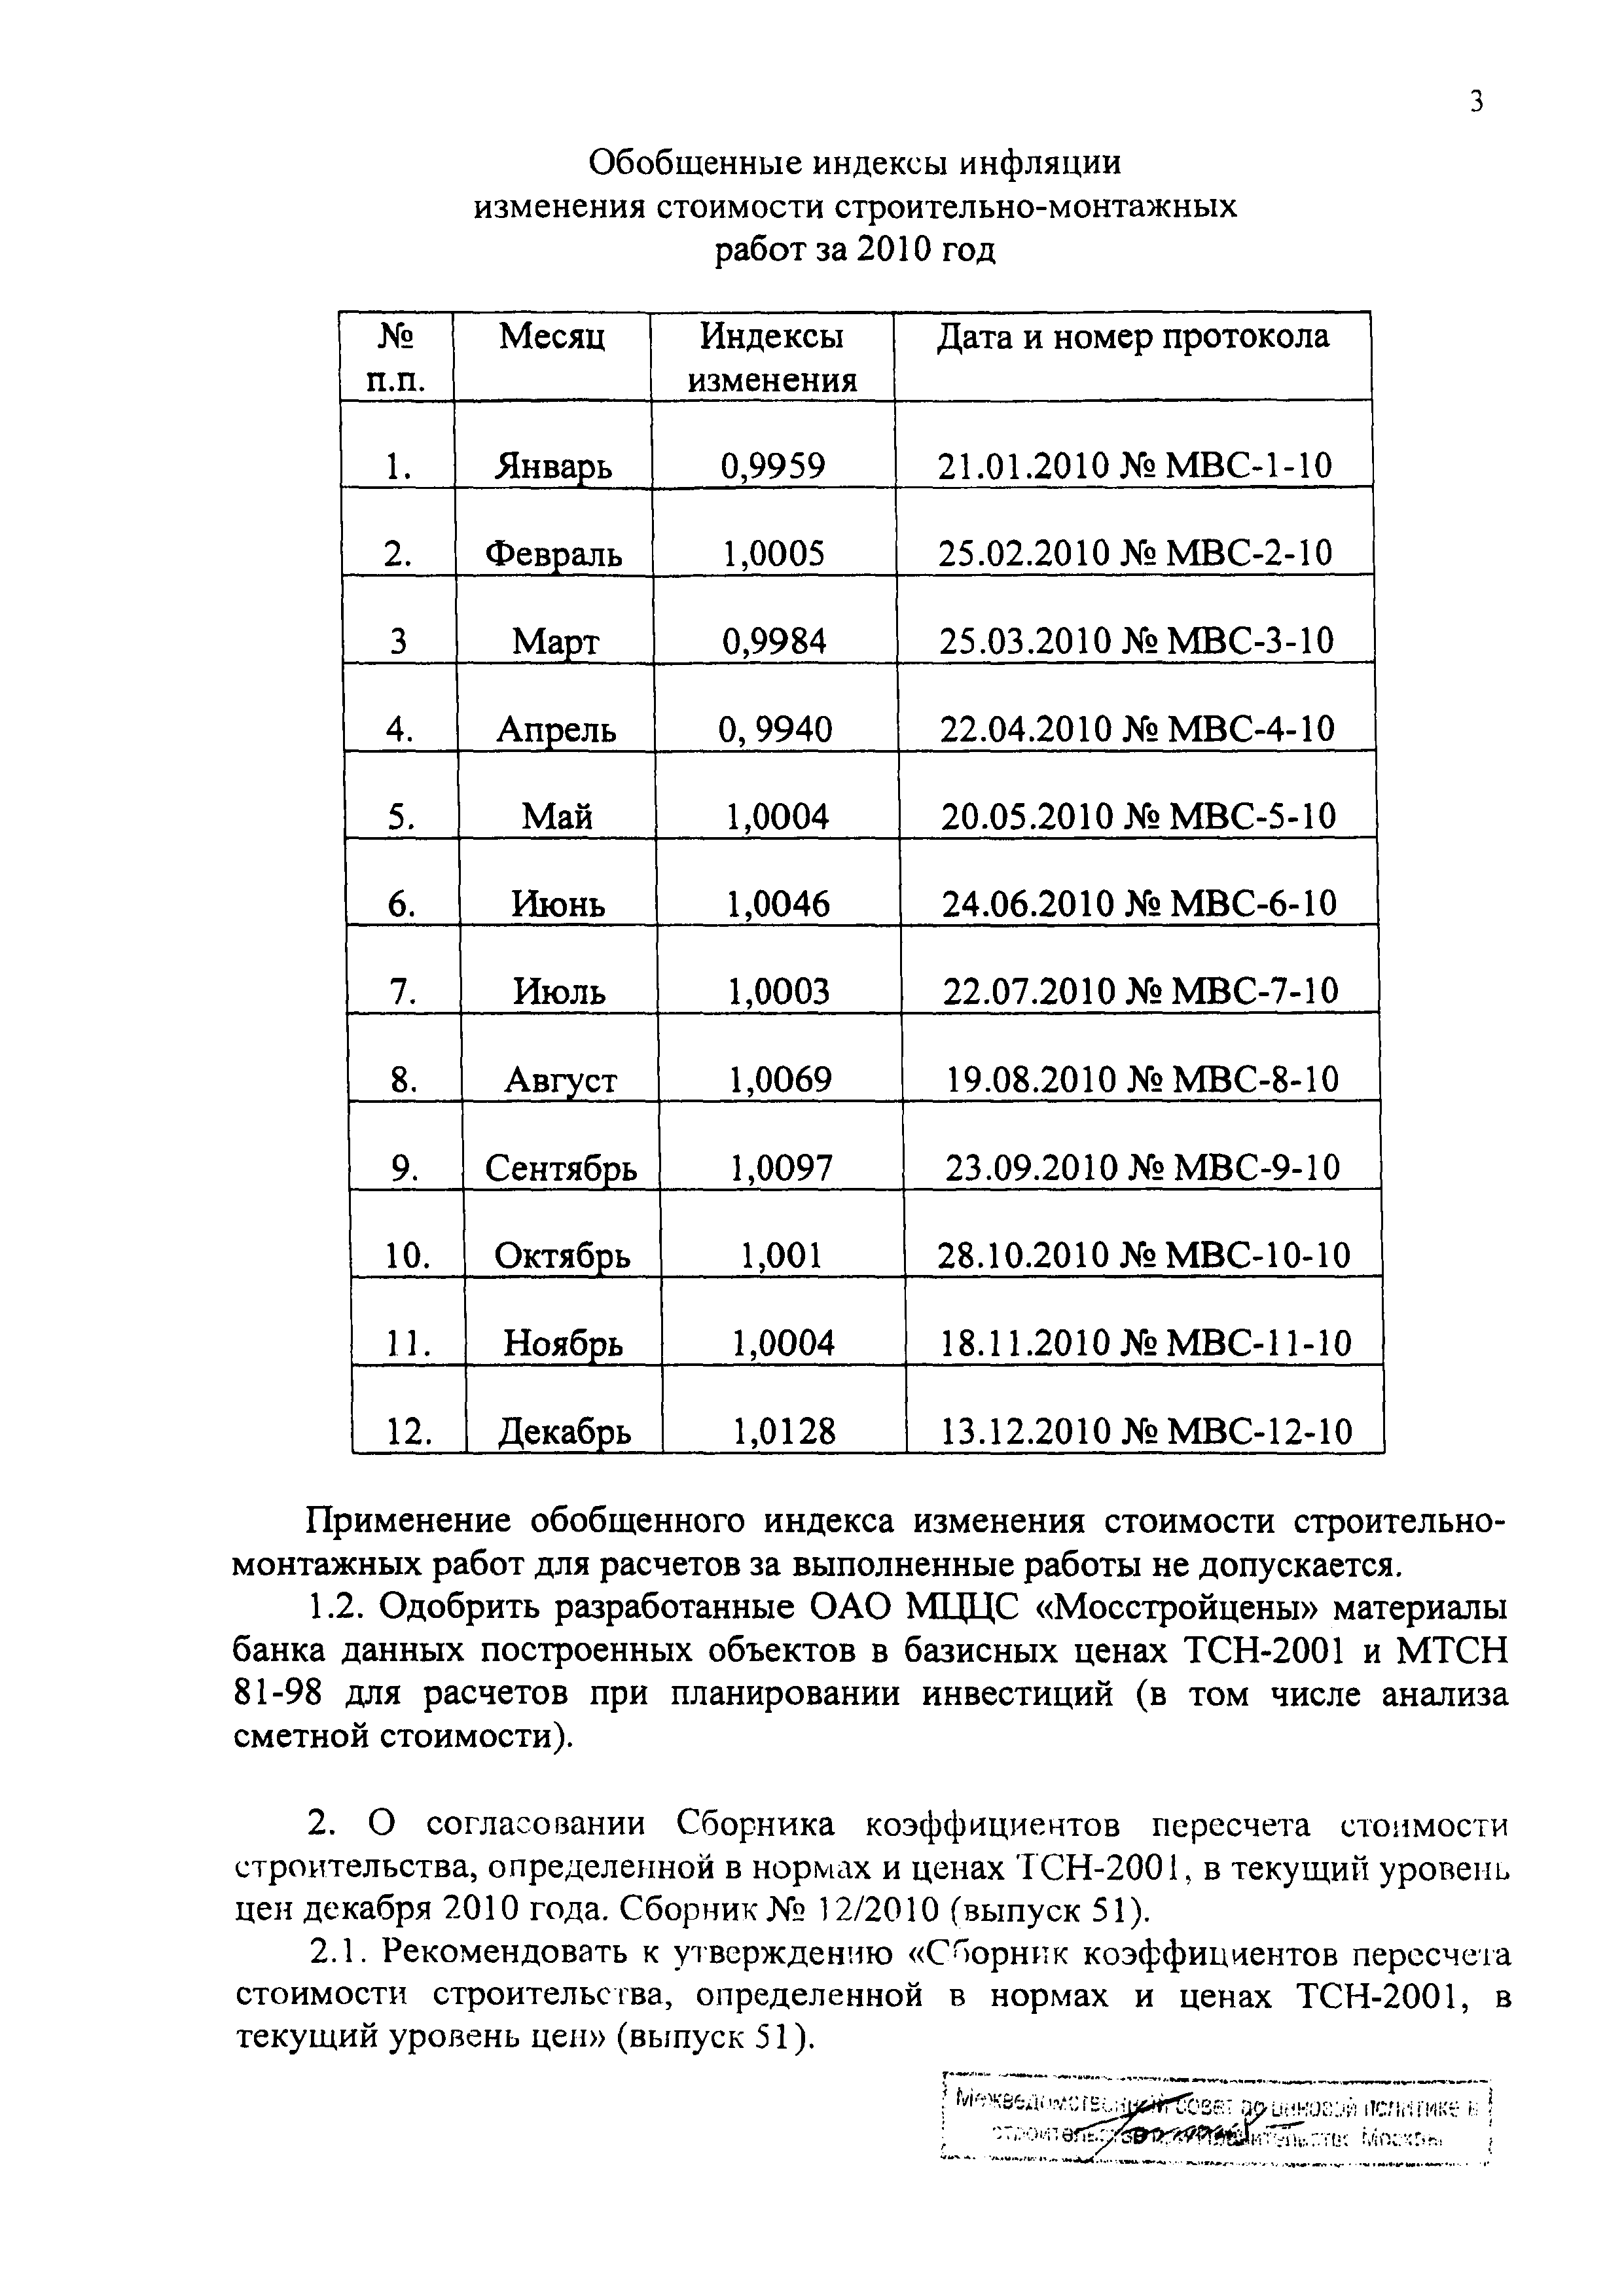 Протокол МВС-12-10